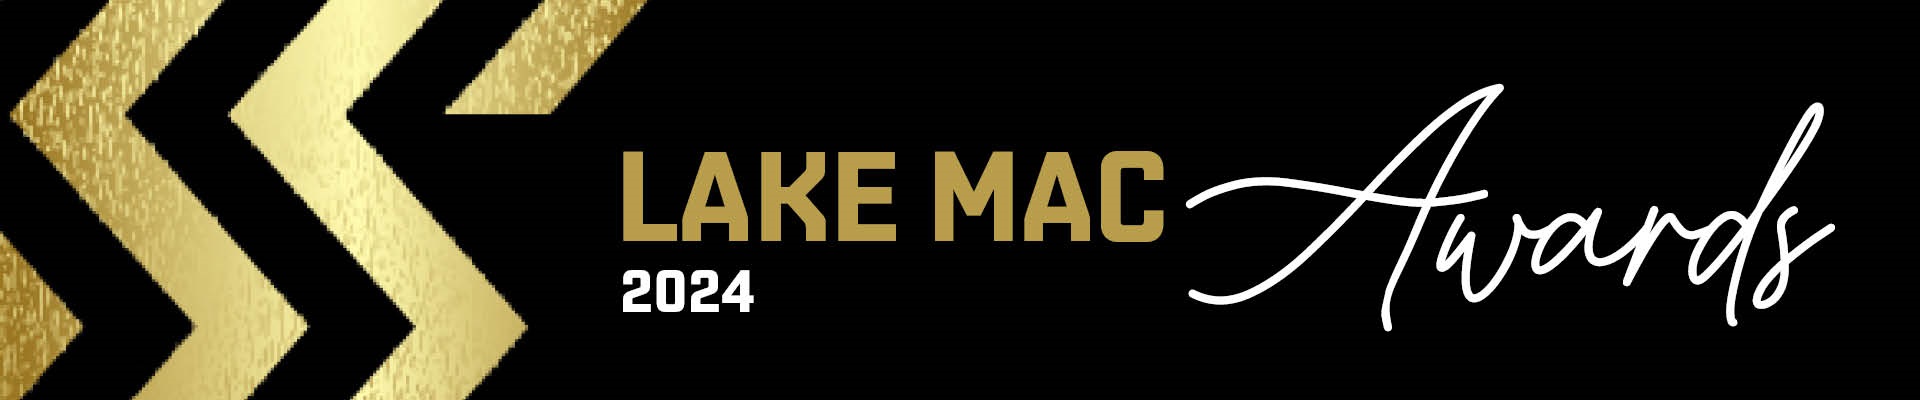 Lake Mac Awards 2024 Skinny Banner.jpg